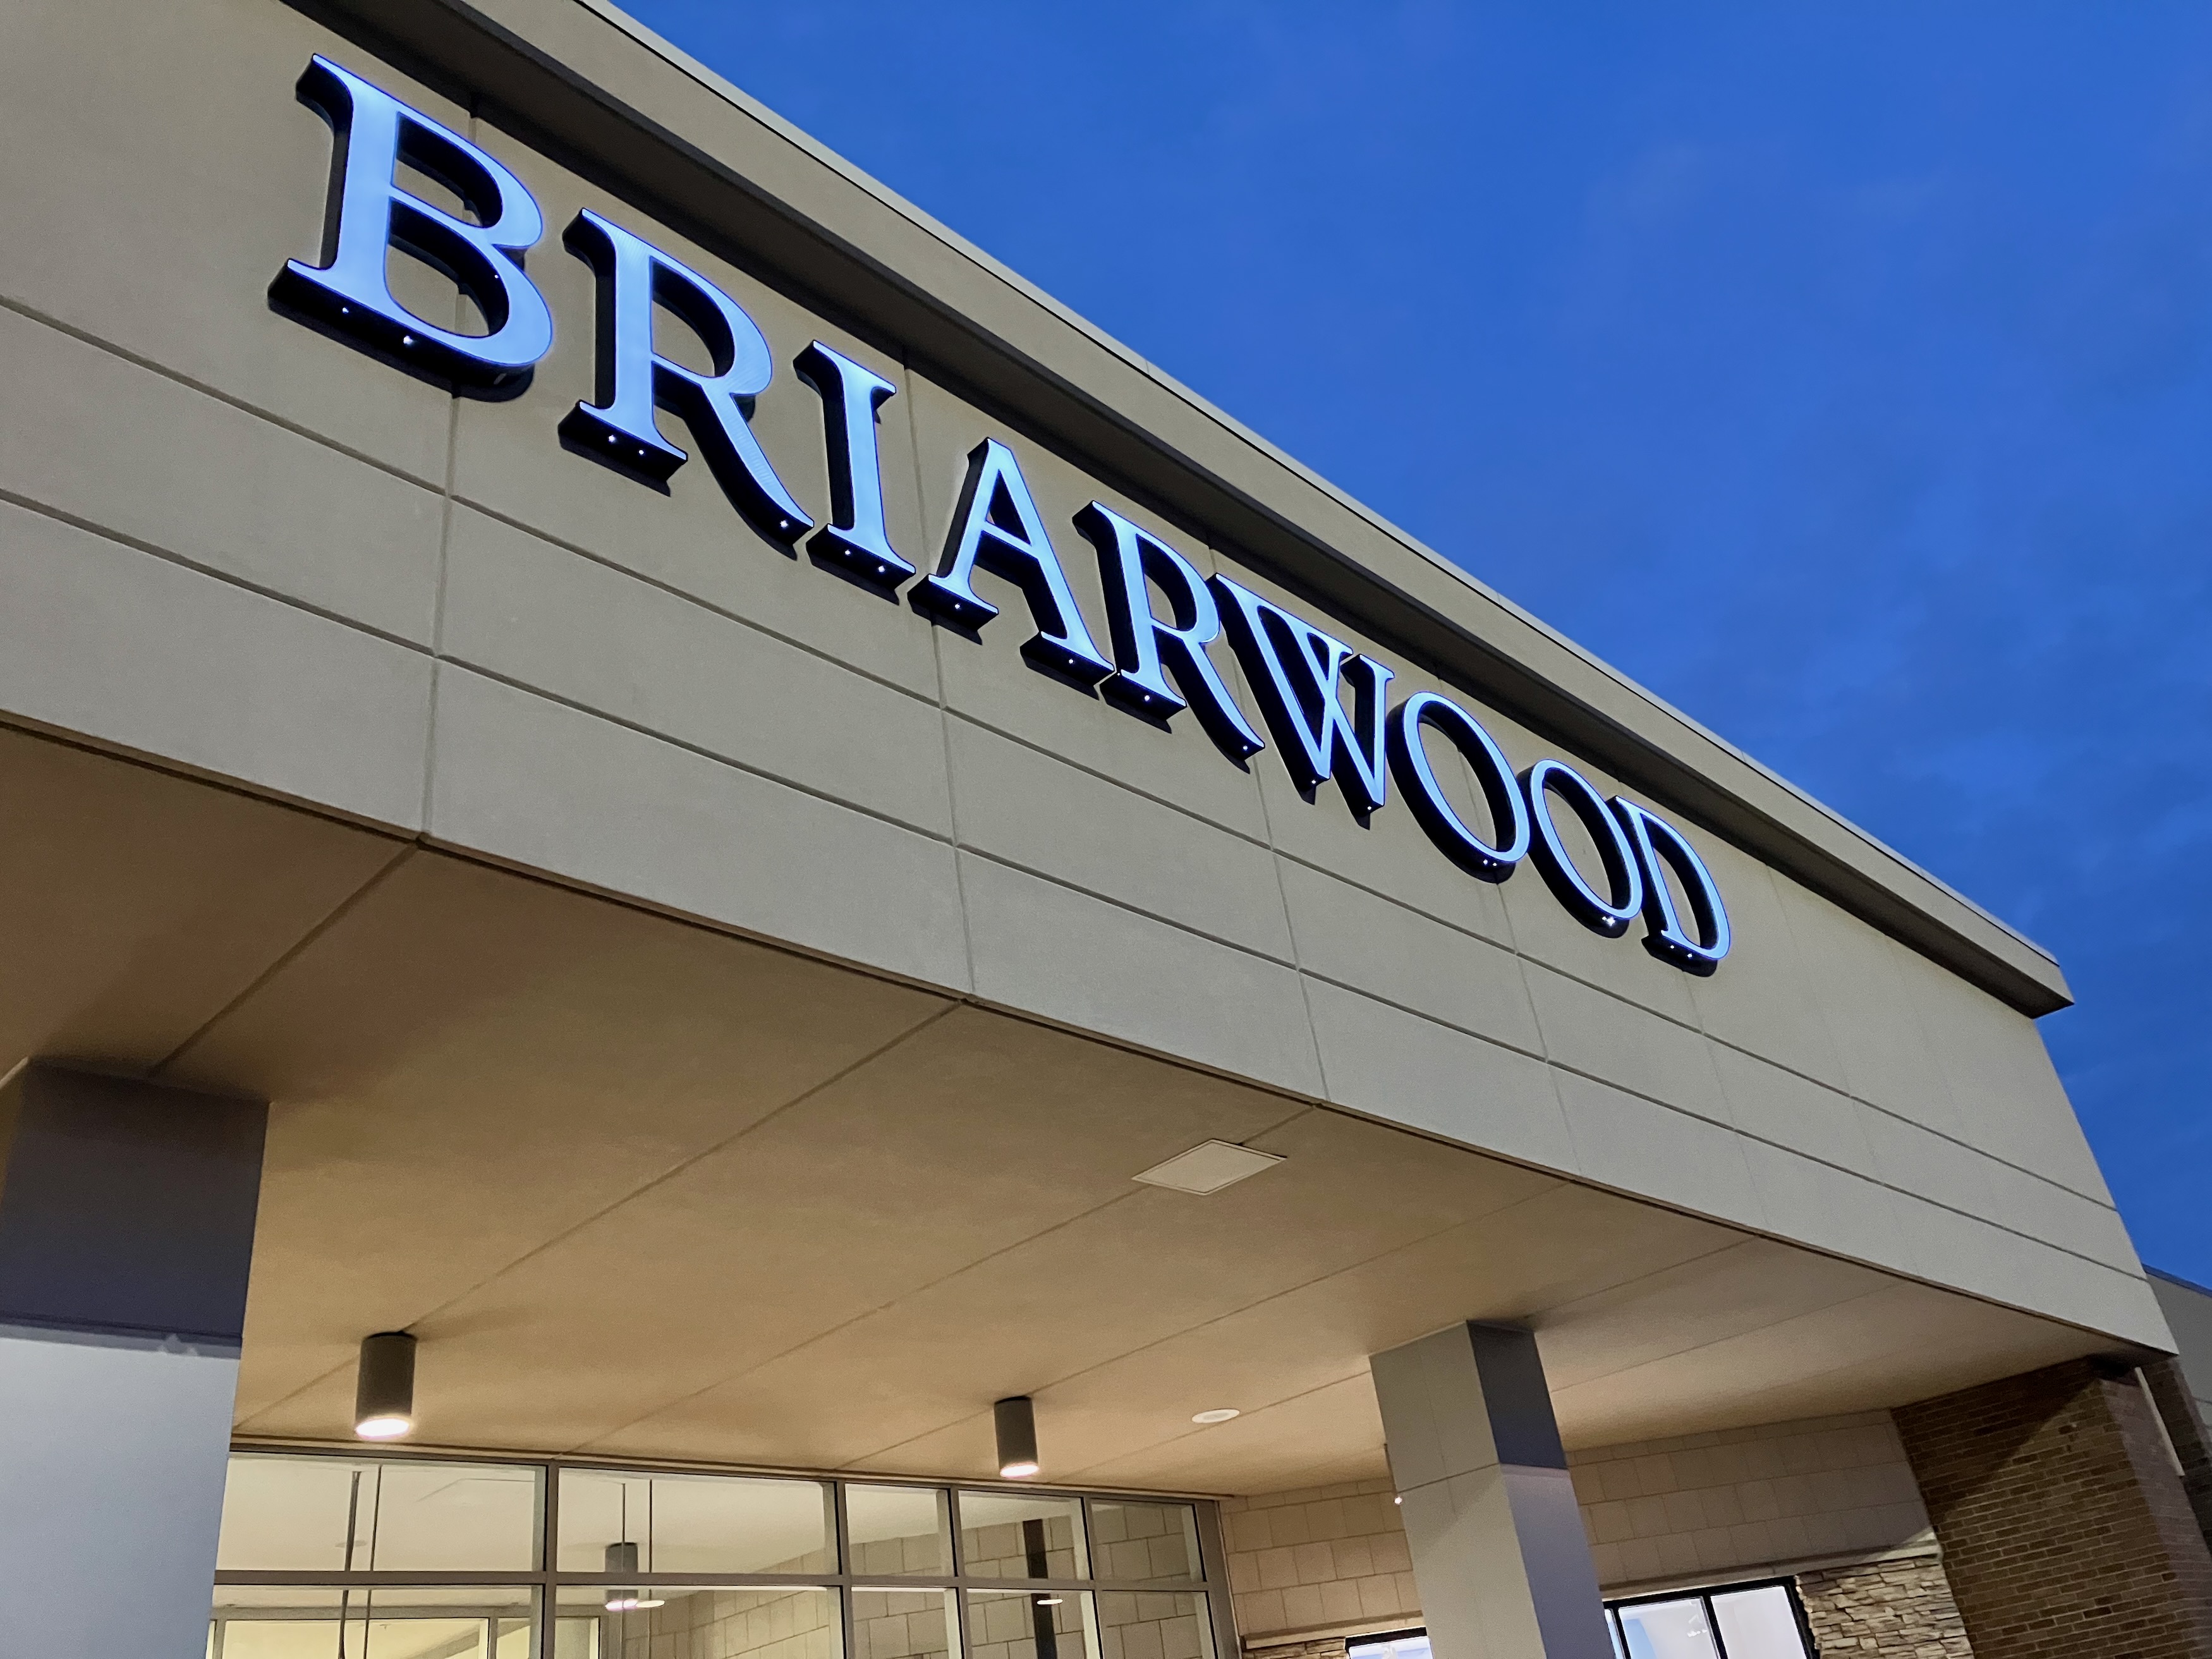 Shopping, movie premieres and Santa: Briarwood Mall celebrates